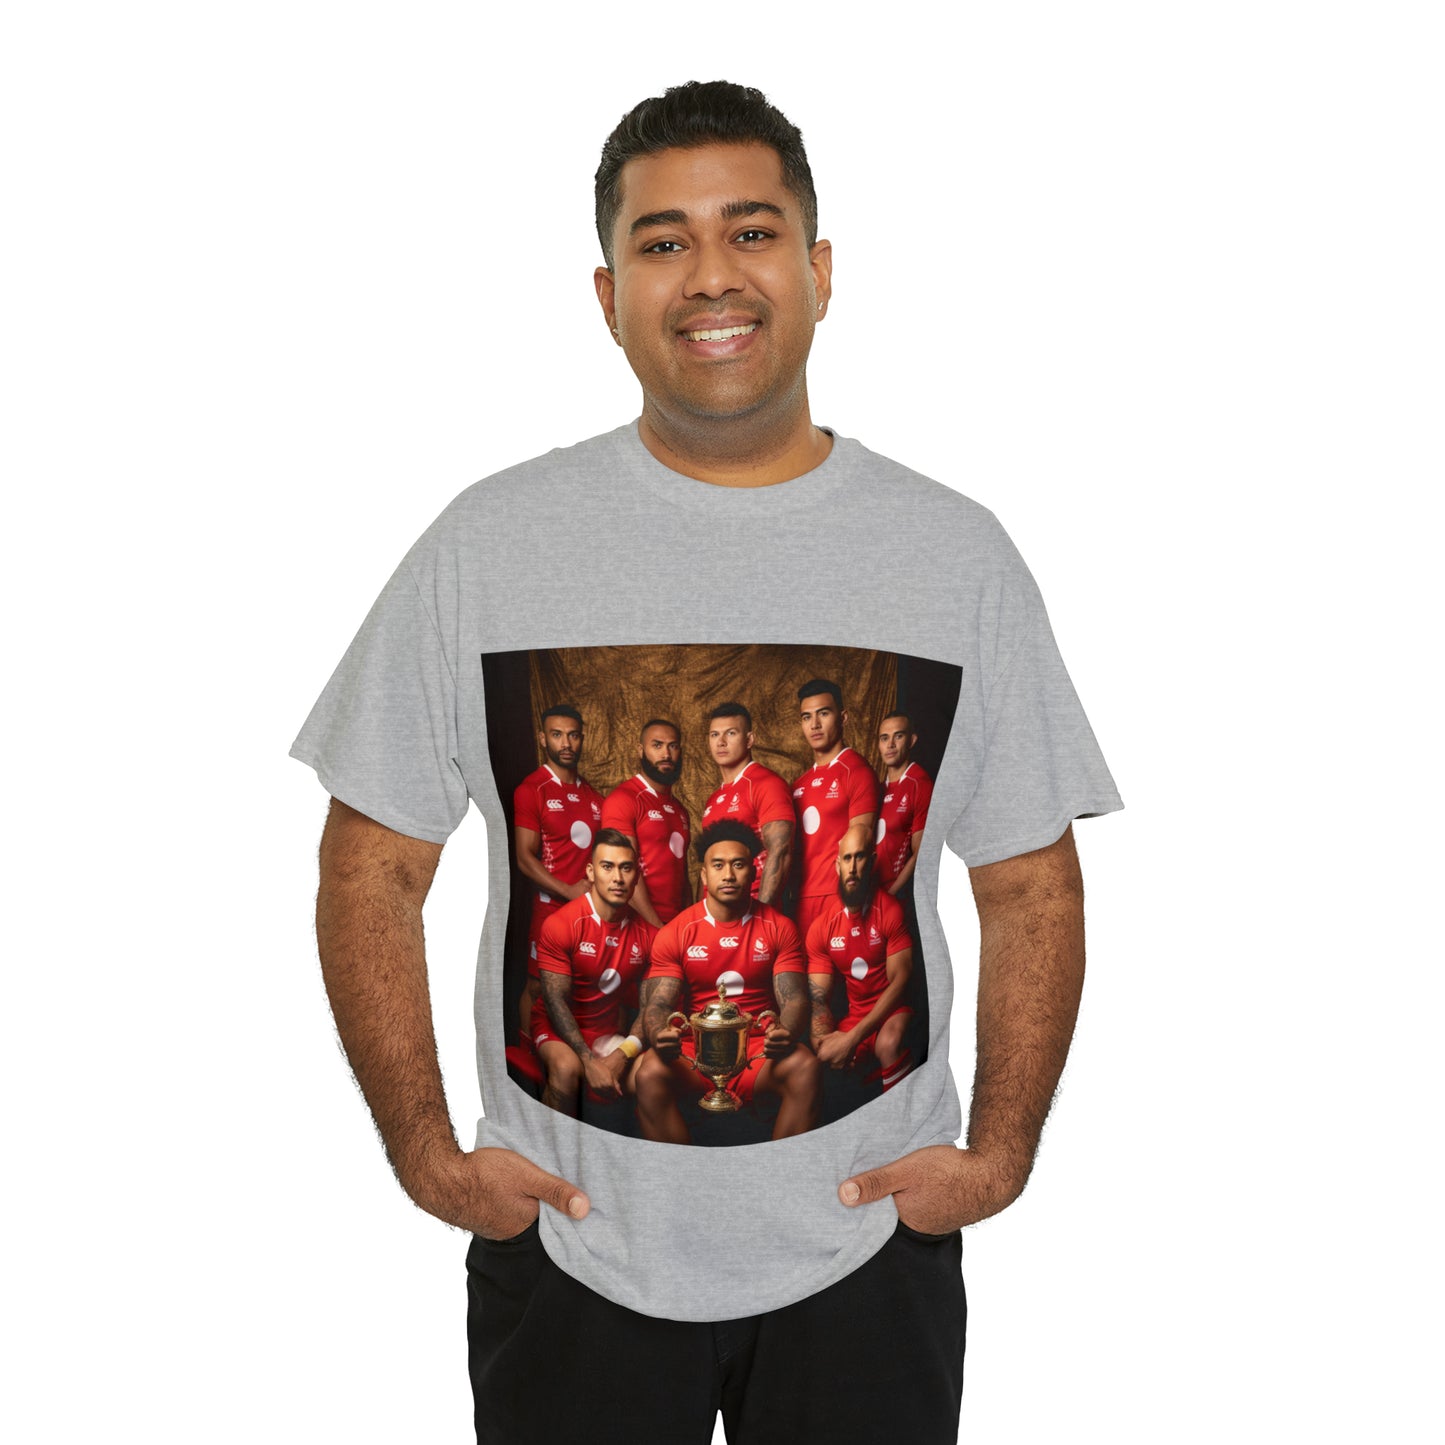 Tonga RWC photoshoot - light shirts